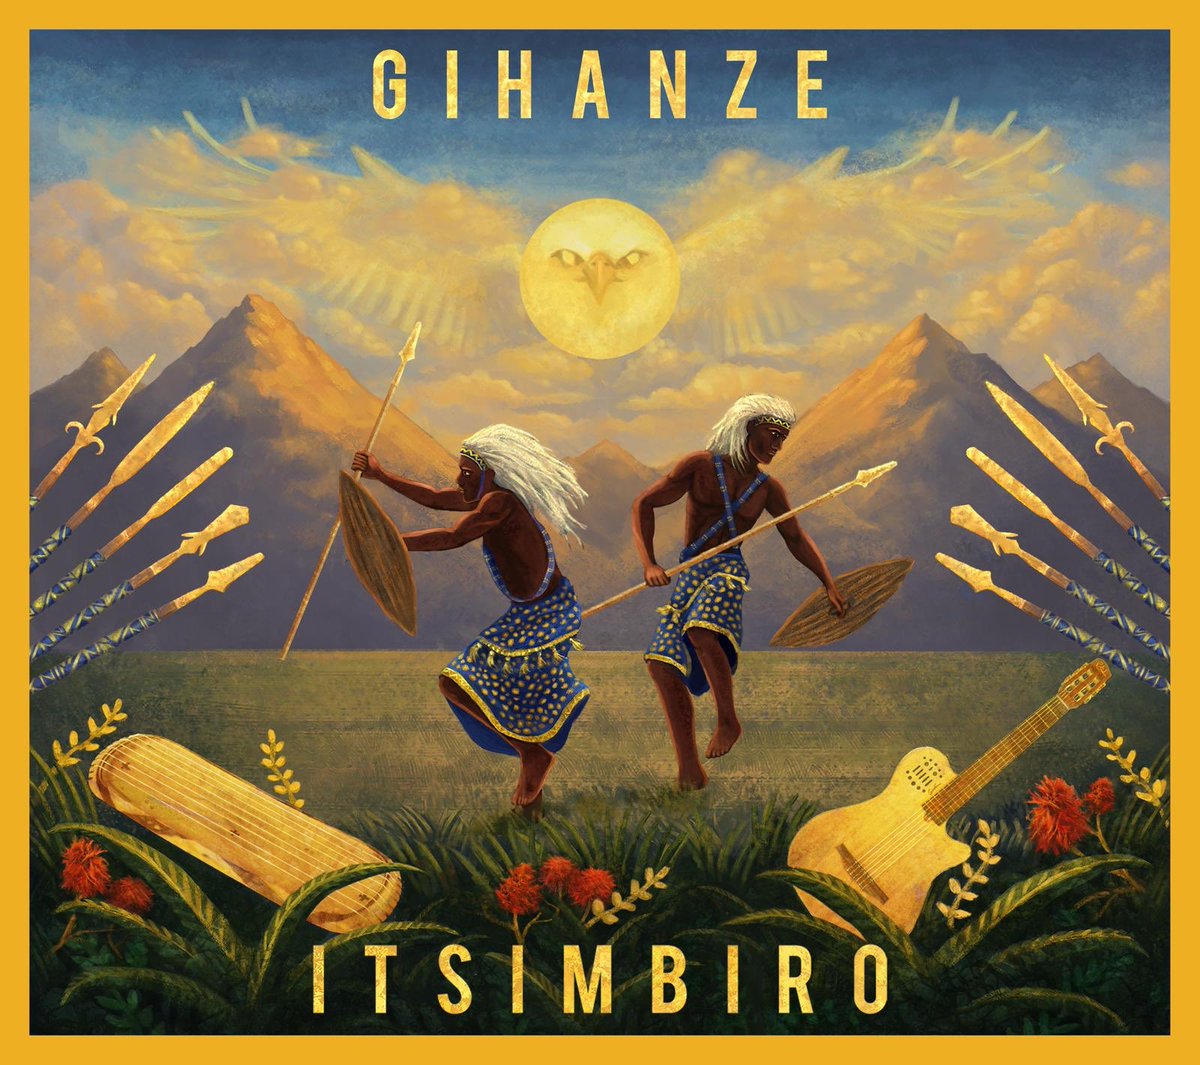 My new album ITSIMBIRO is now available on YouTube, Spotify, Apple Music, Amazon Music and gihanze.com #gihanze #blues #africanblues #worldmusic #africanmusic #traditionalmusic #rwandamusic #visitrwanda